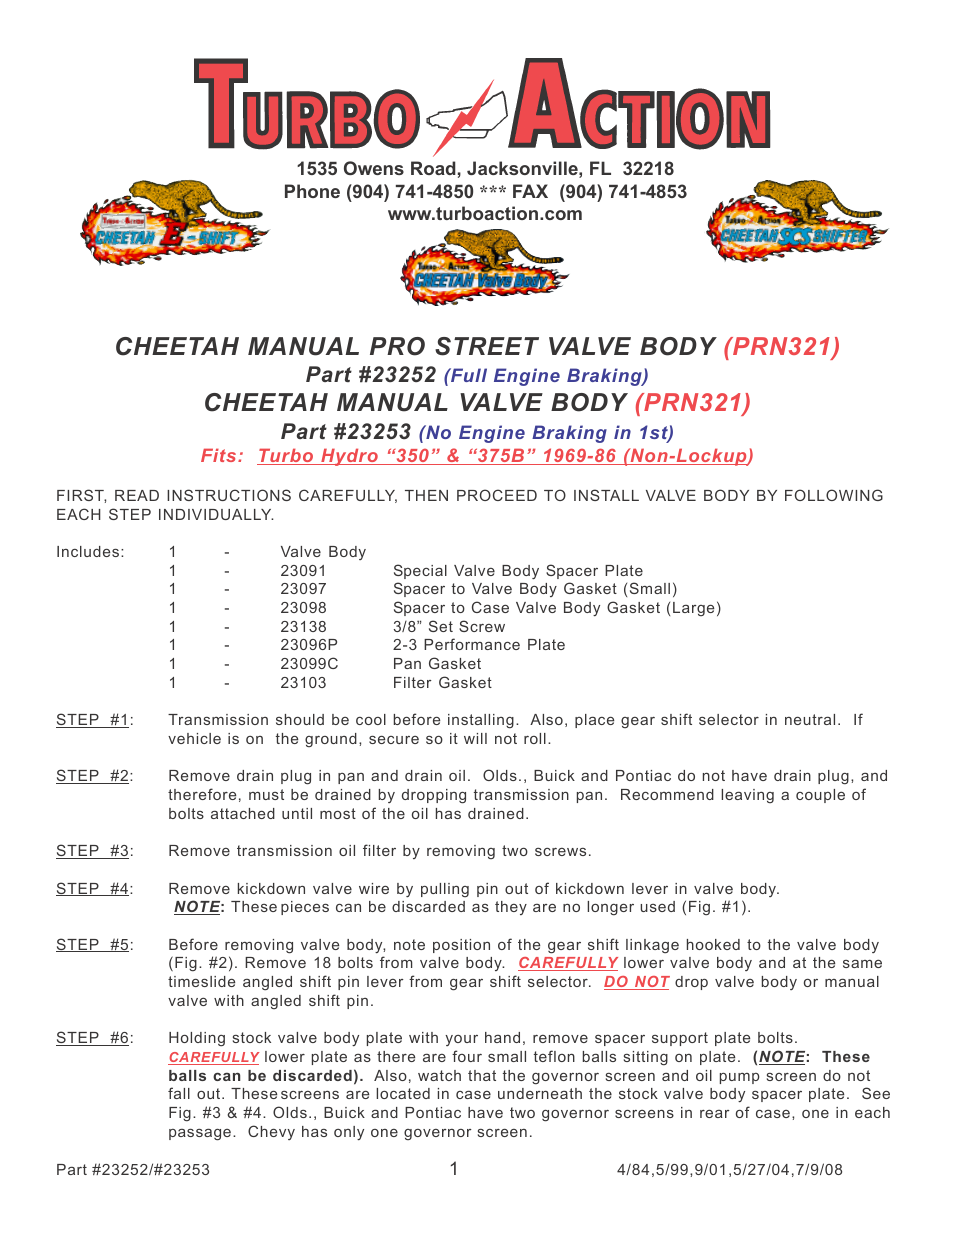 23252 Turbo Hydro 350 Pro Street Manual Valve Body (PRN321)